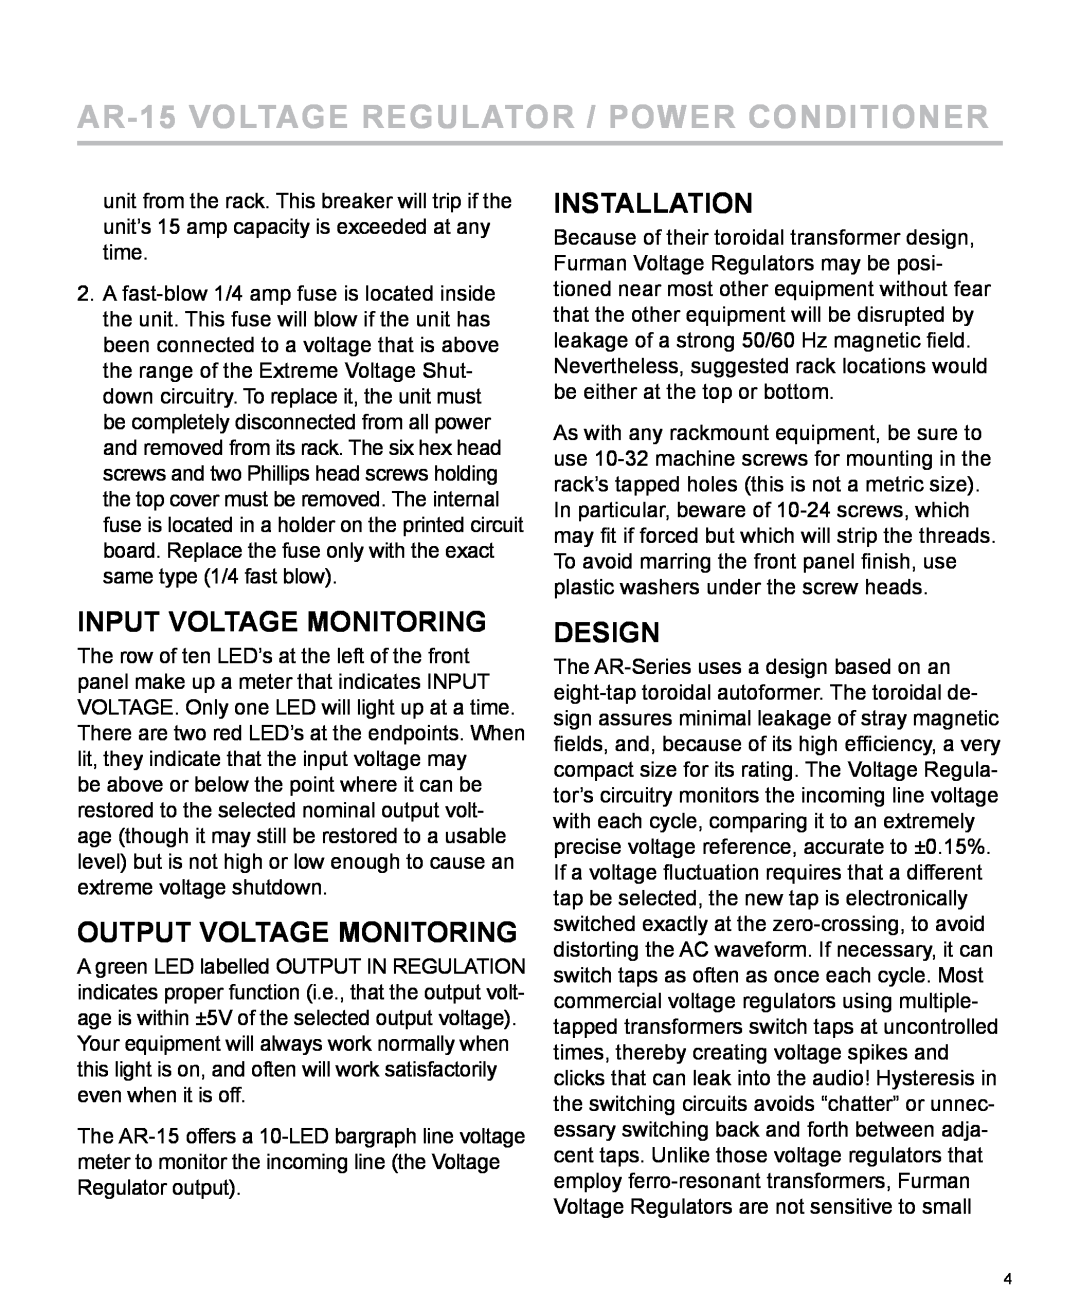 Furman Sound AR-15 manual Input Voltage Monitoring, Output Voltage Monitoring, Installation, Design 